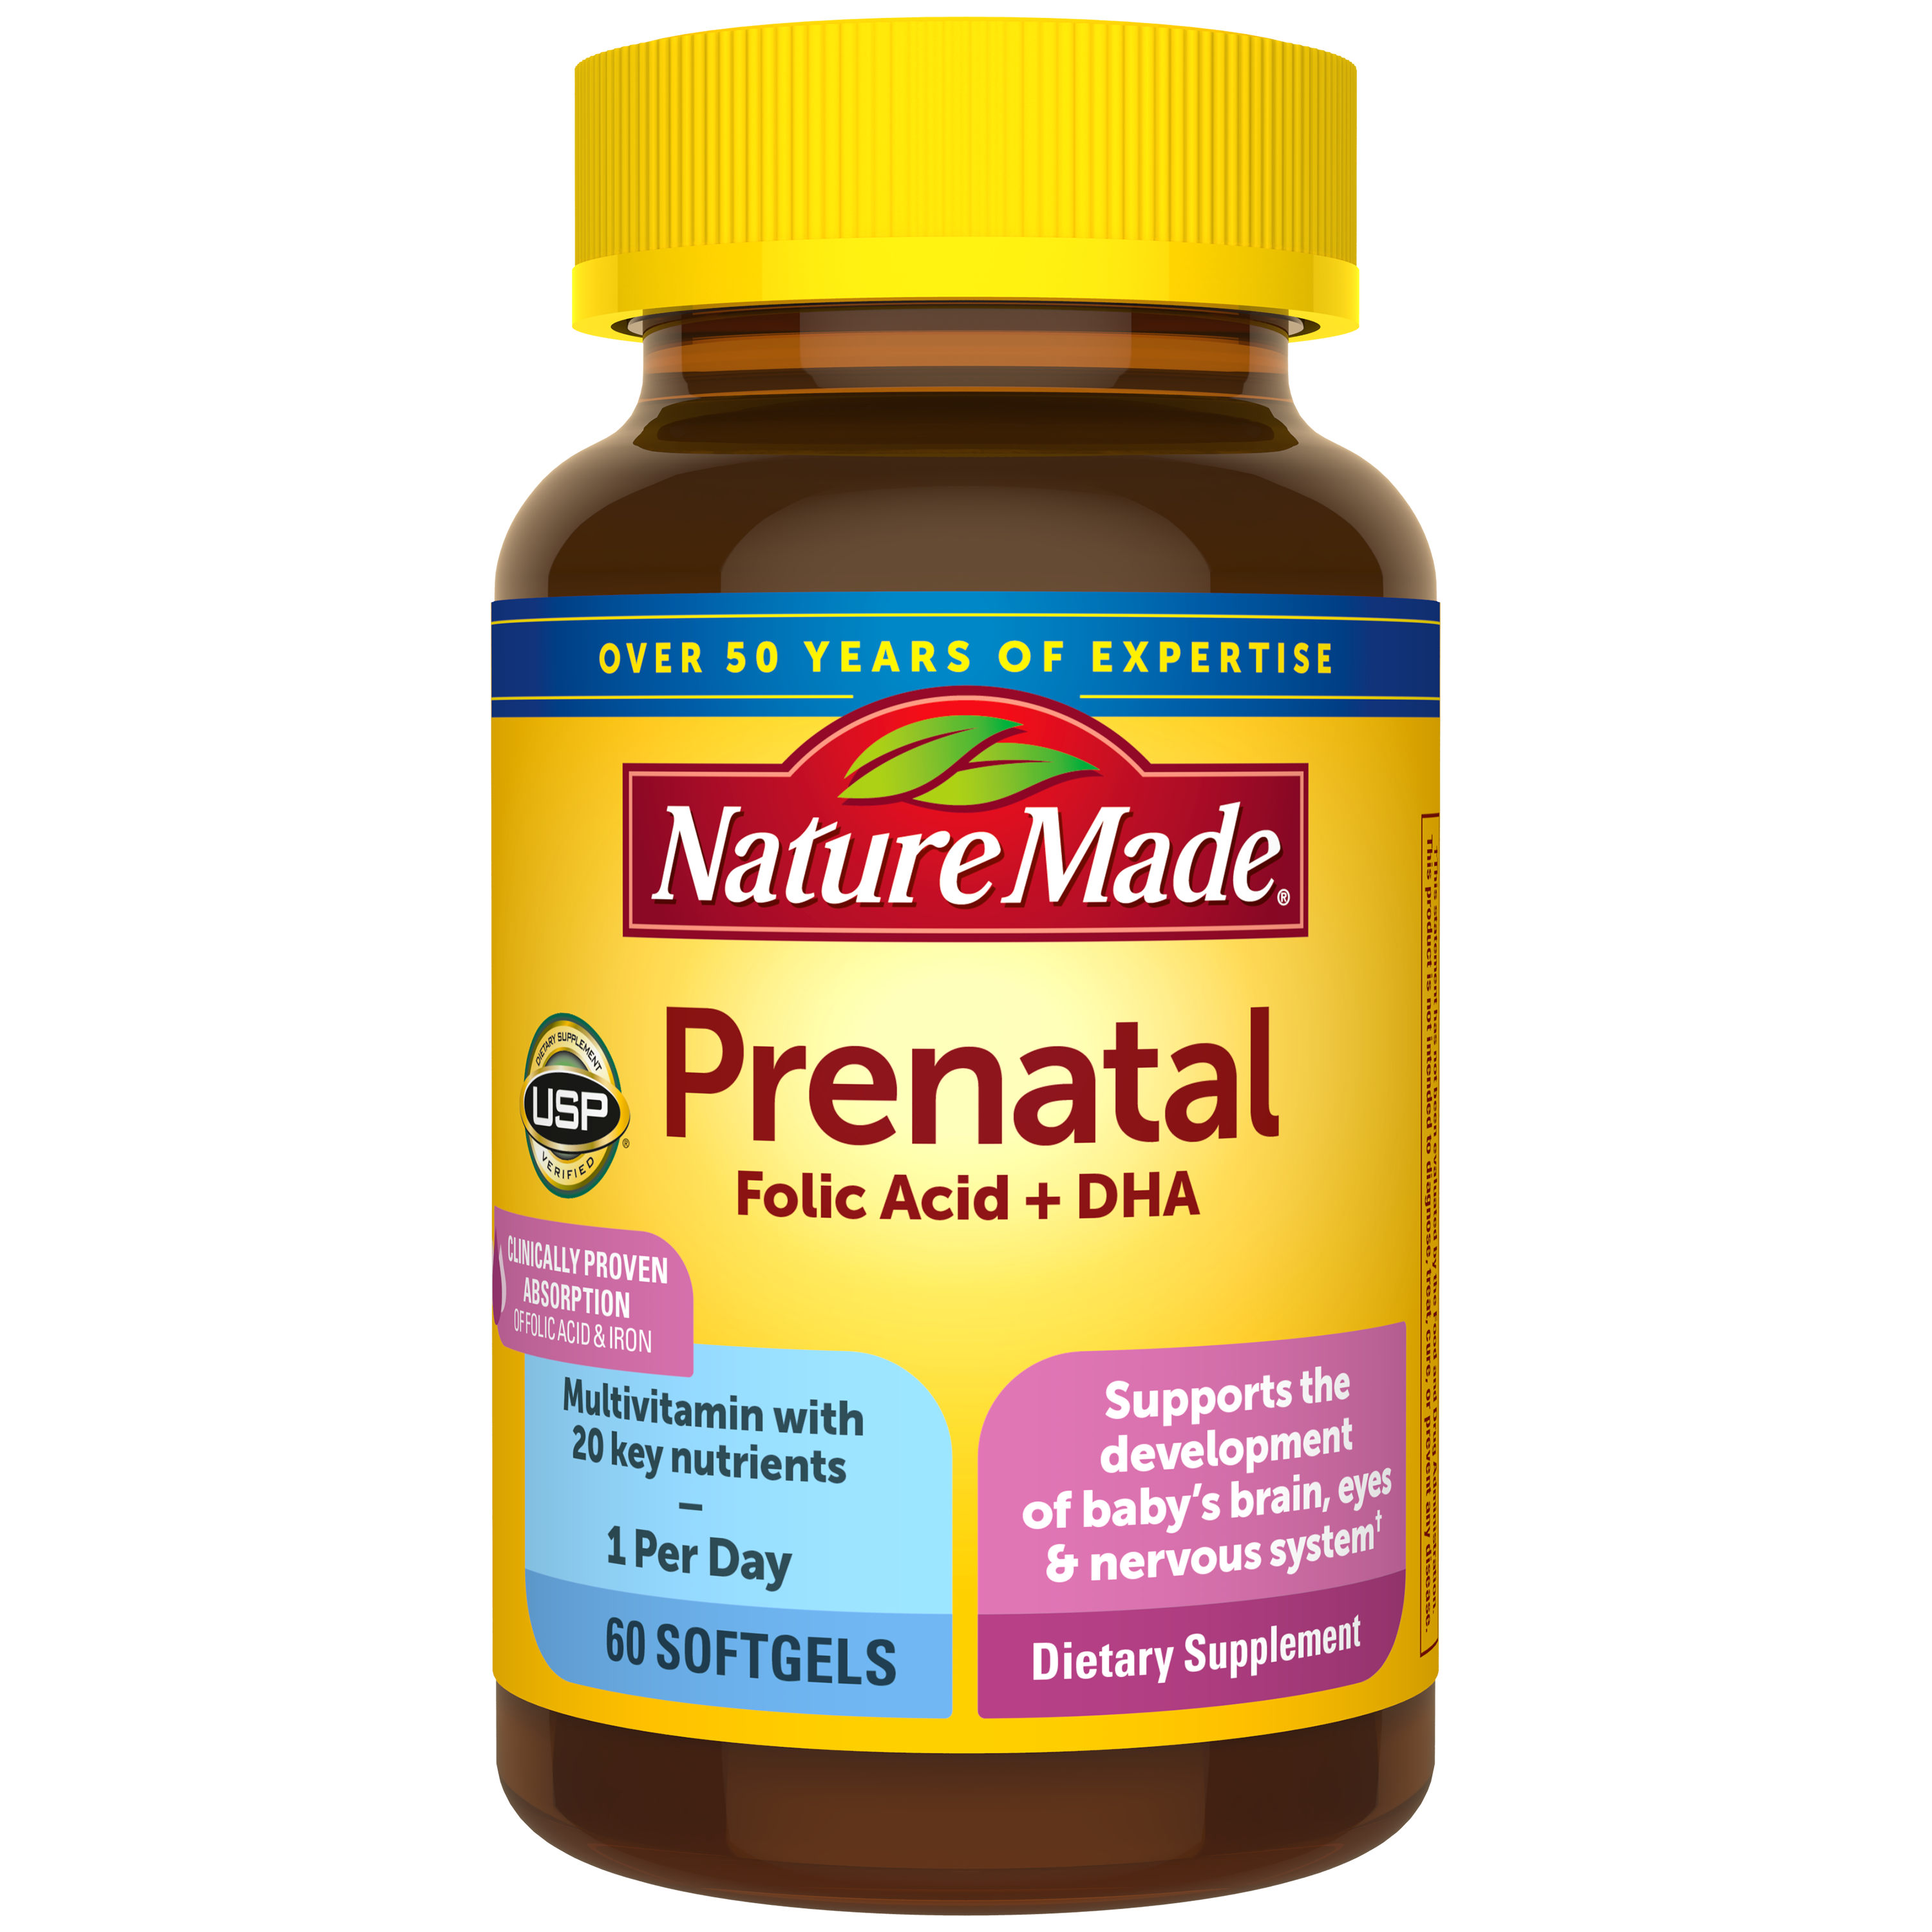 Nature Made Prenatal Multivitamin Folic Acid + DHA Softgels